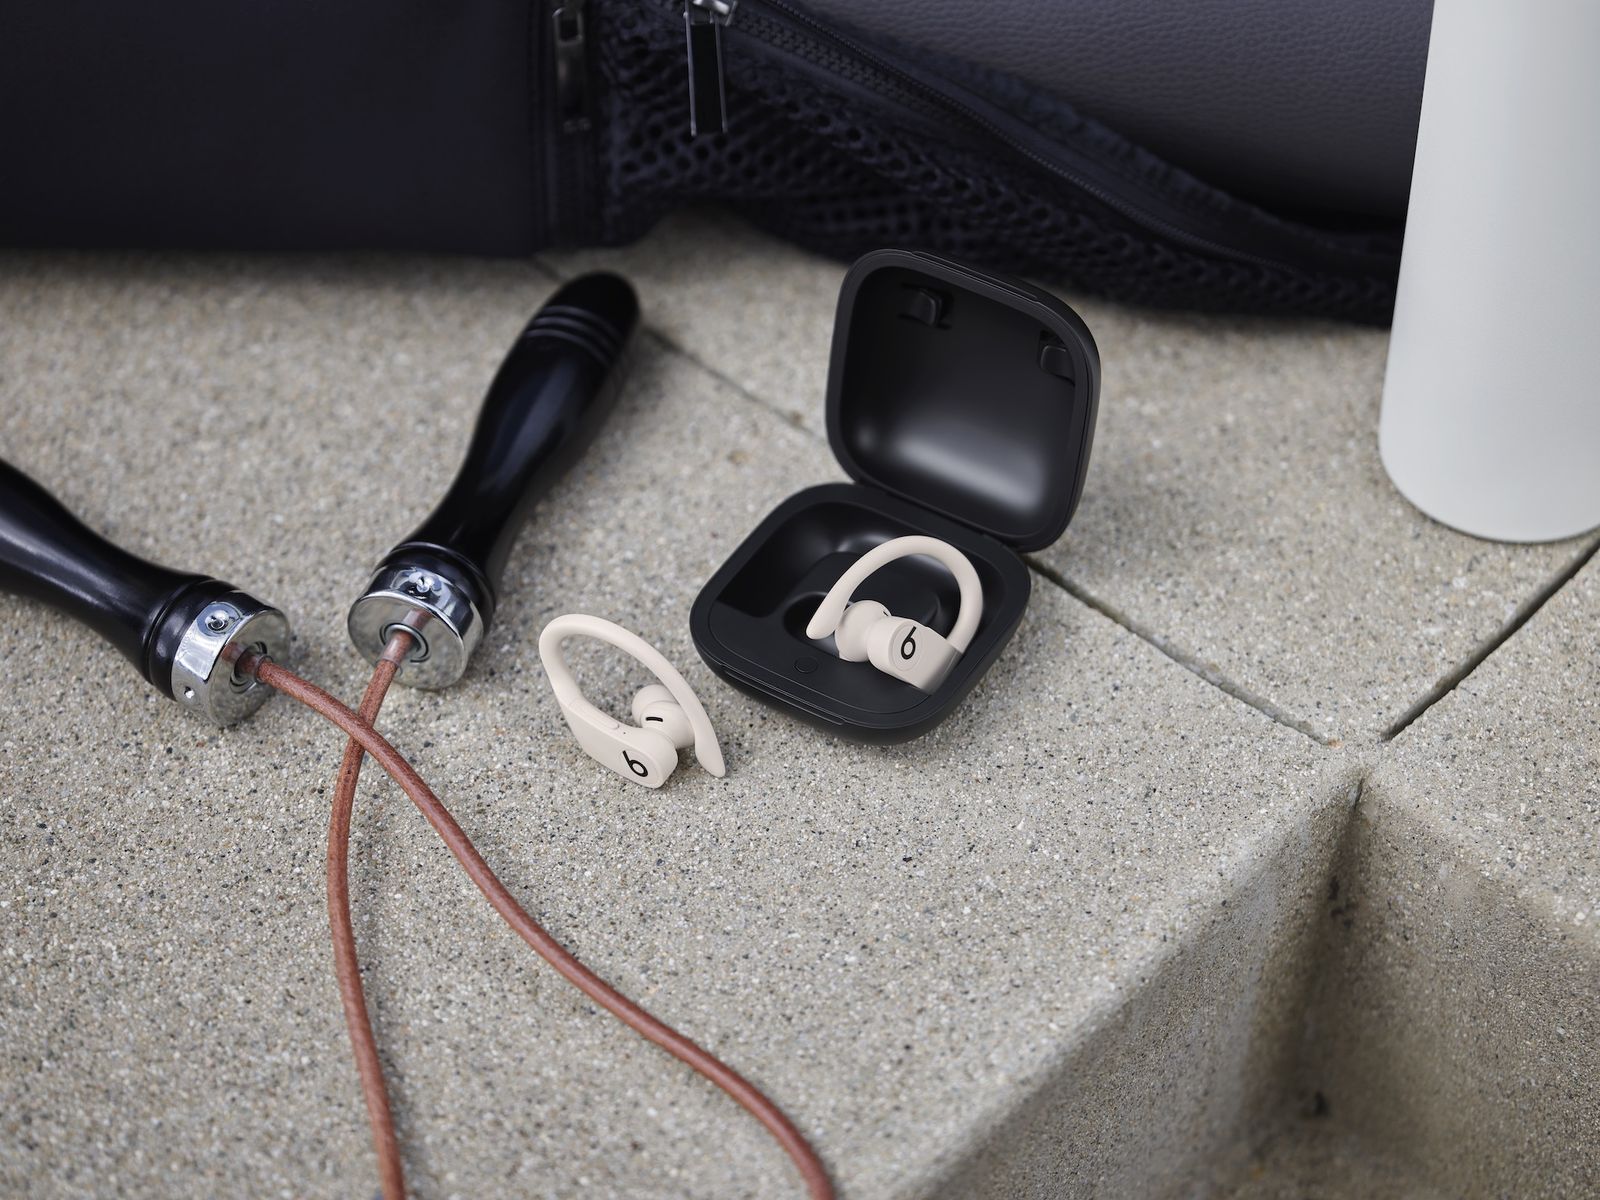 powerbeats pro wireless charging case